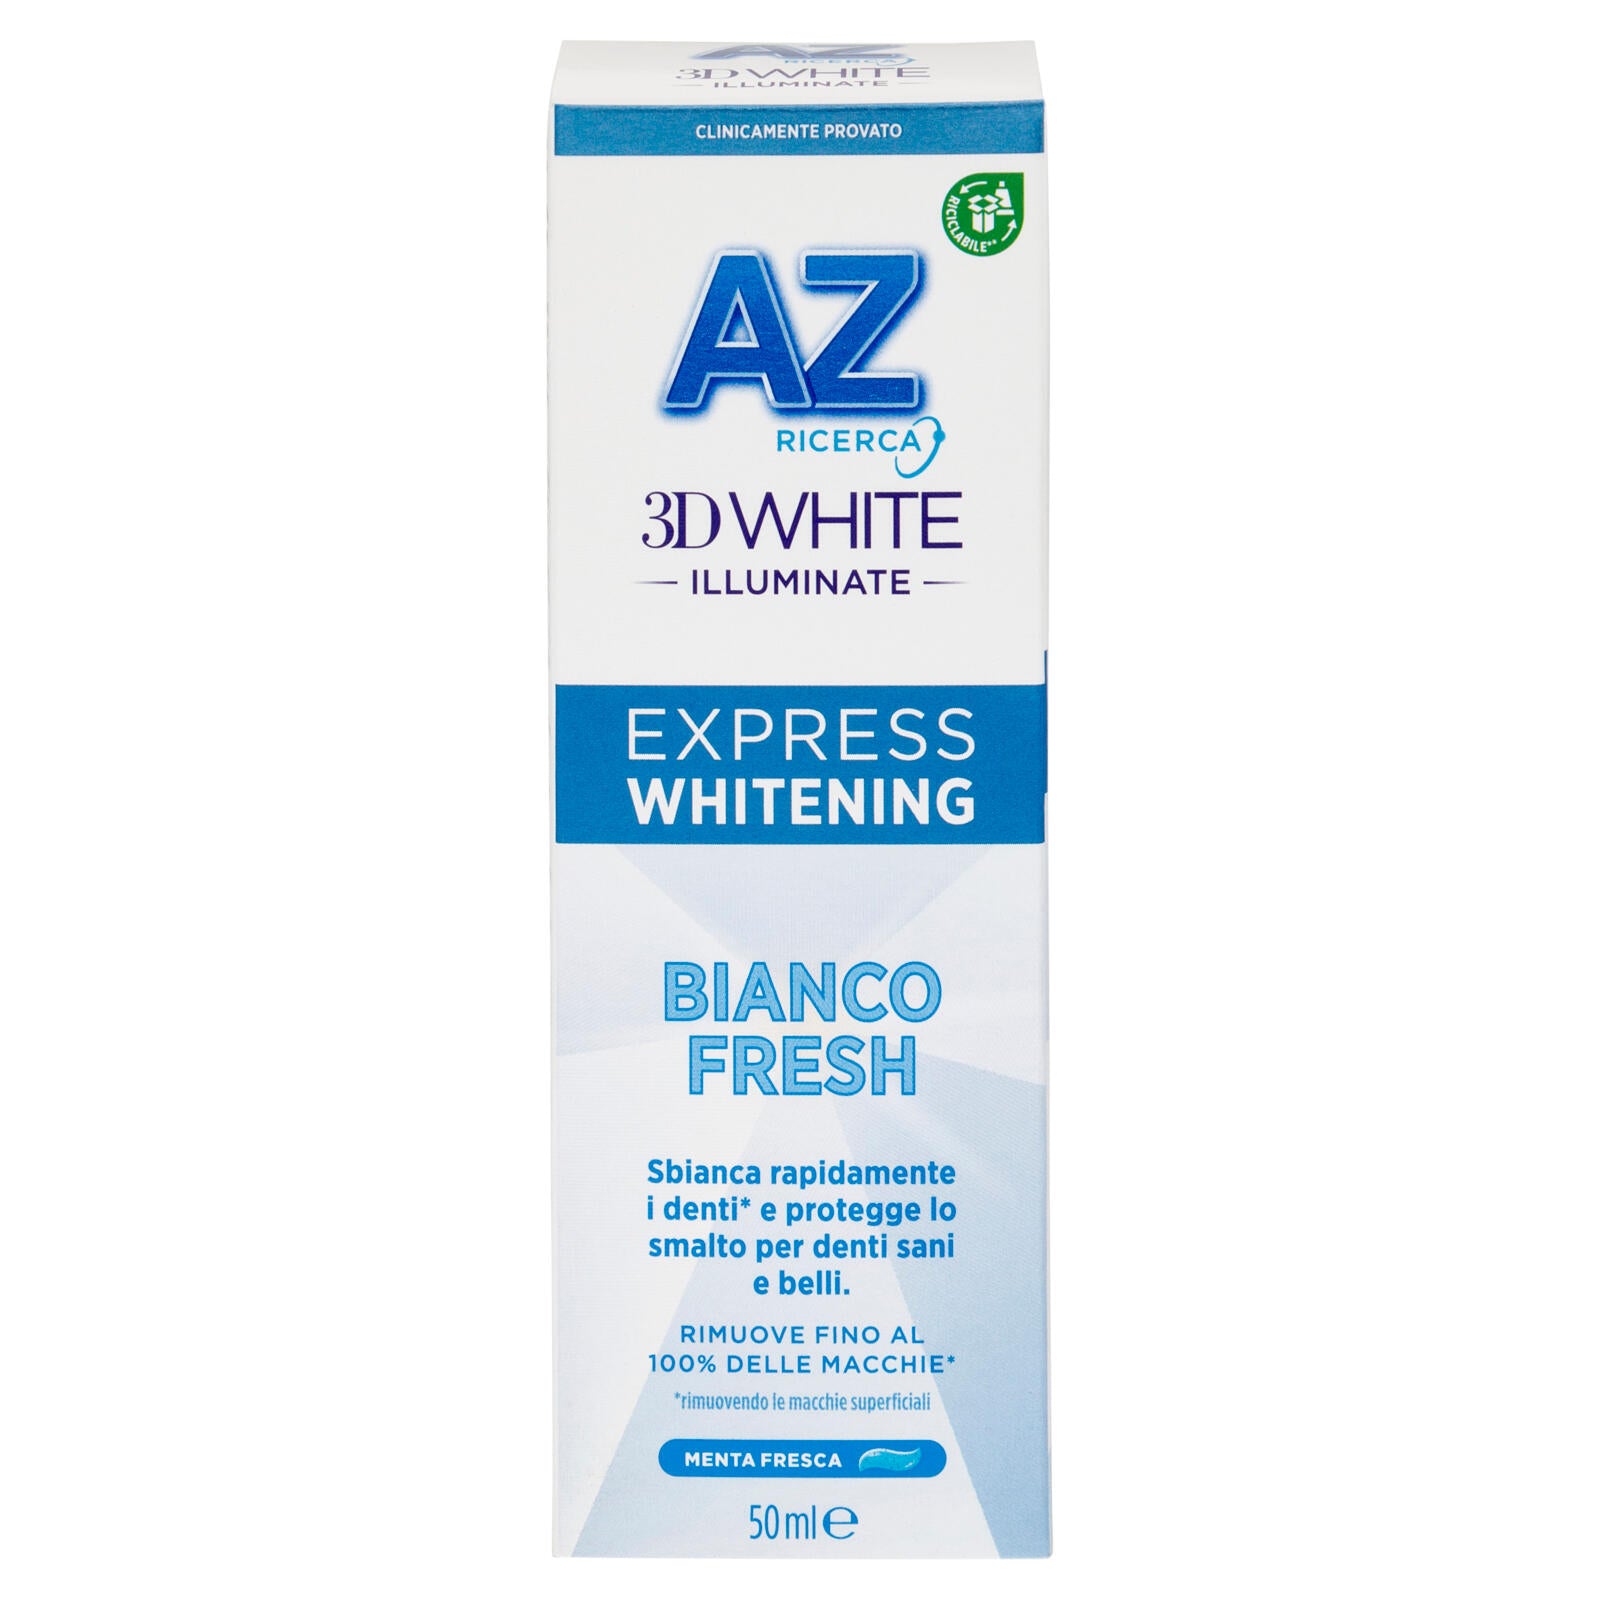 AZ Ricerca Dentifricio 3D White Illuminate Express Whitening Bianco Fresh 50 ml